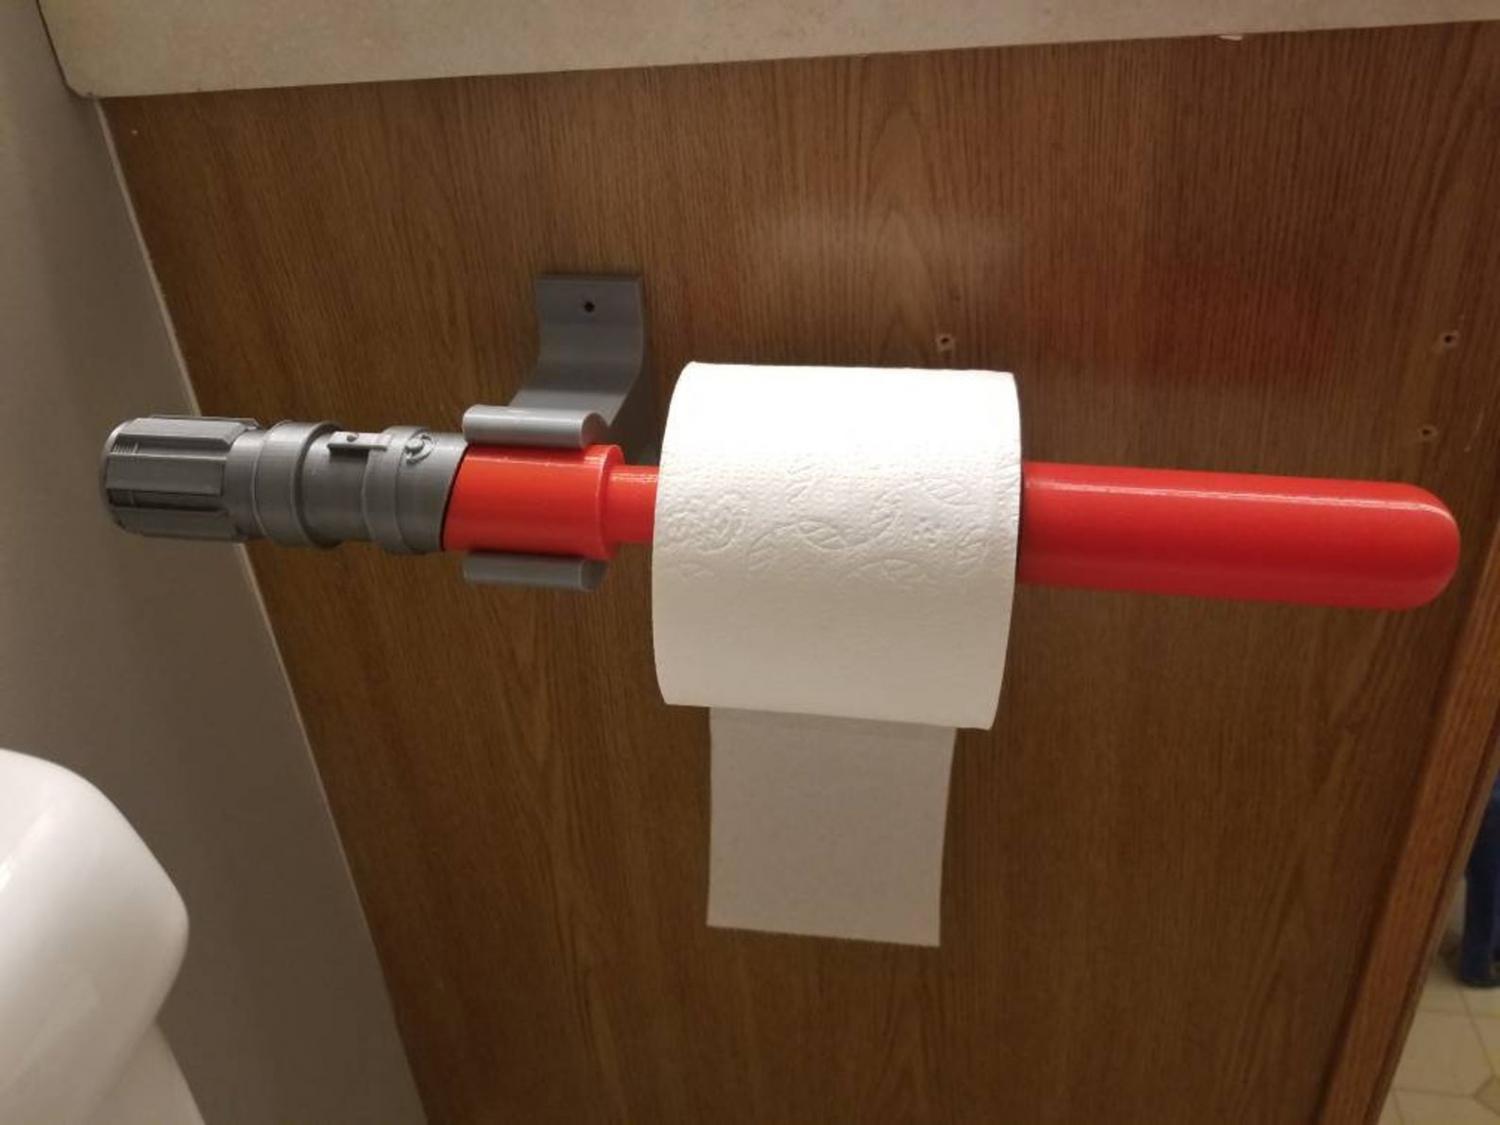 Star Wars lightsaber toilet paper holder - Wall mounted lightsaber Star Wars geeky toilet paper holder